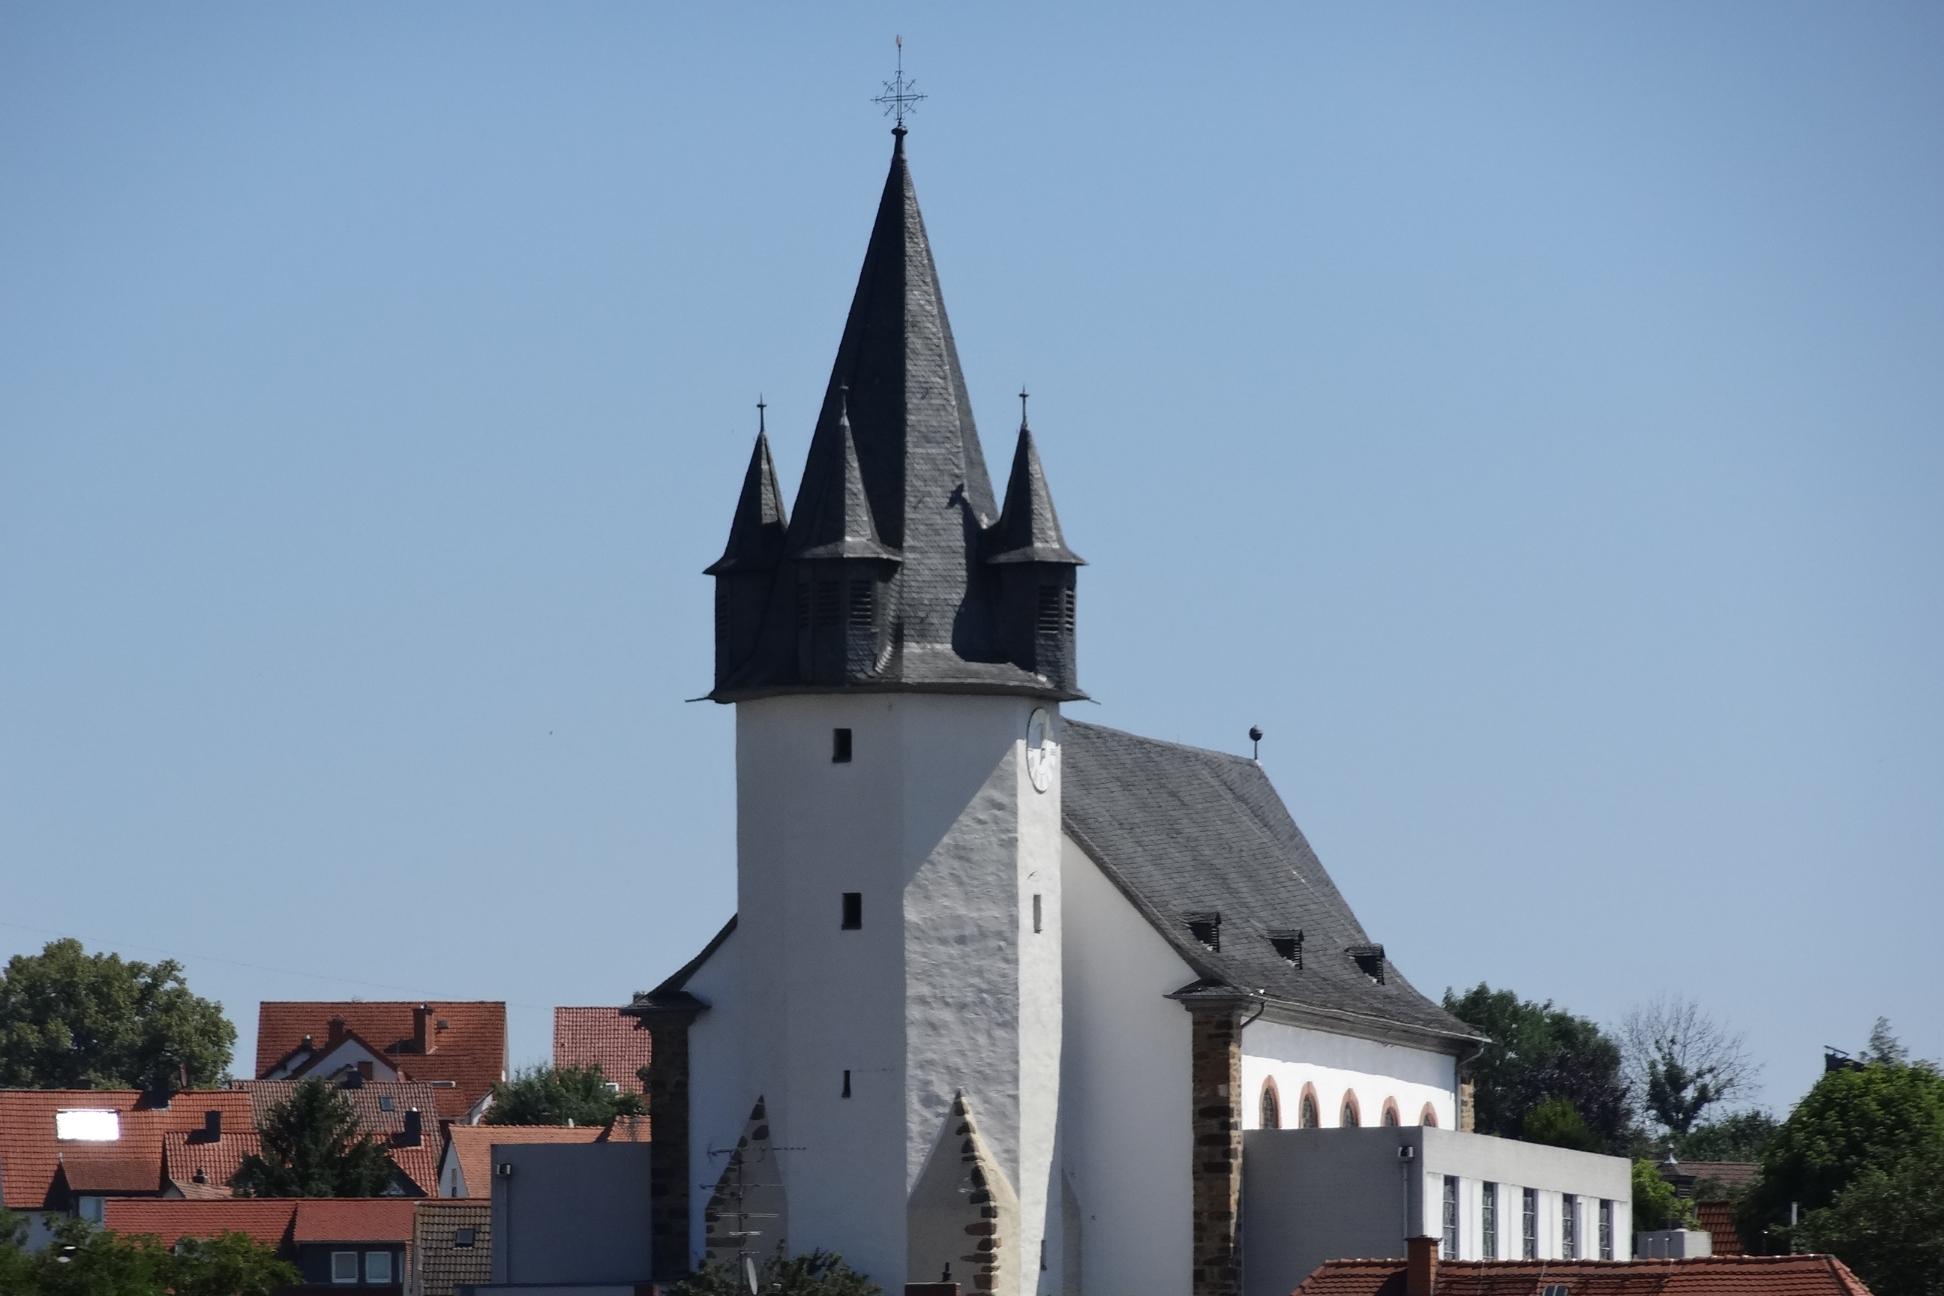 St. Gallus (Rockenberg)